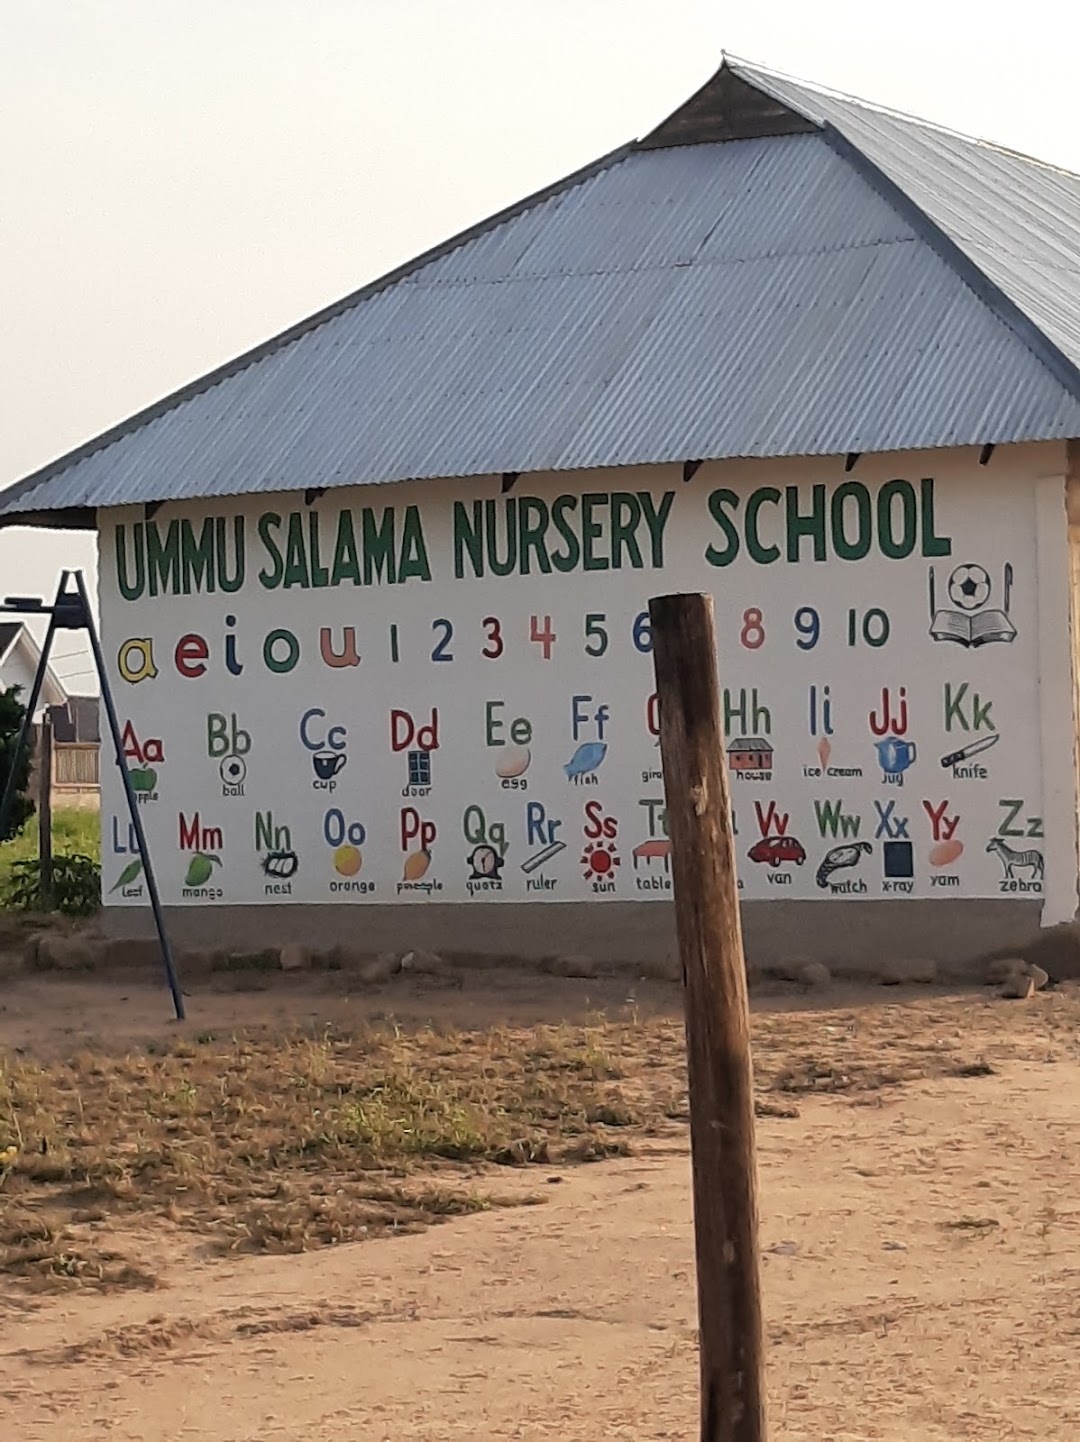 UMMU SALAMA NURSARY SCHOOL